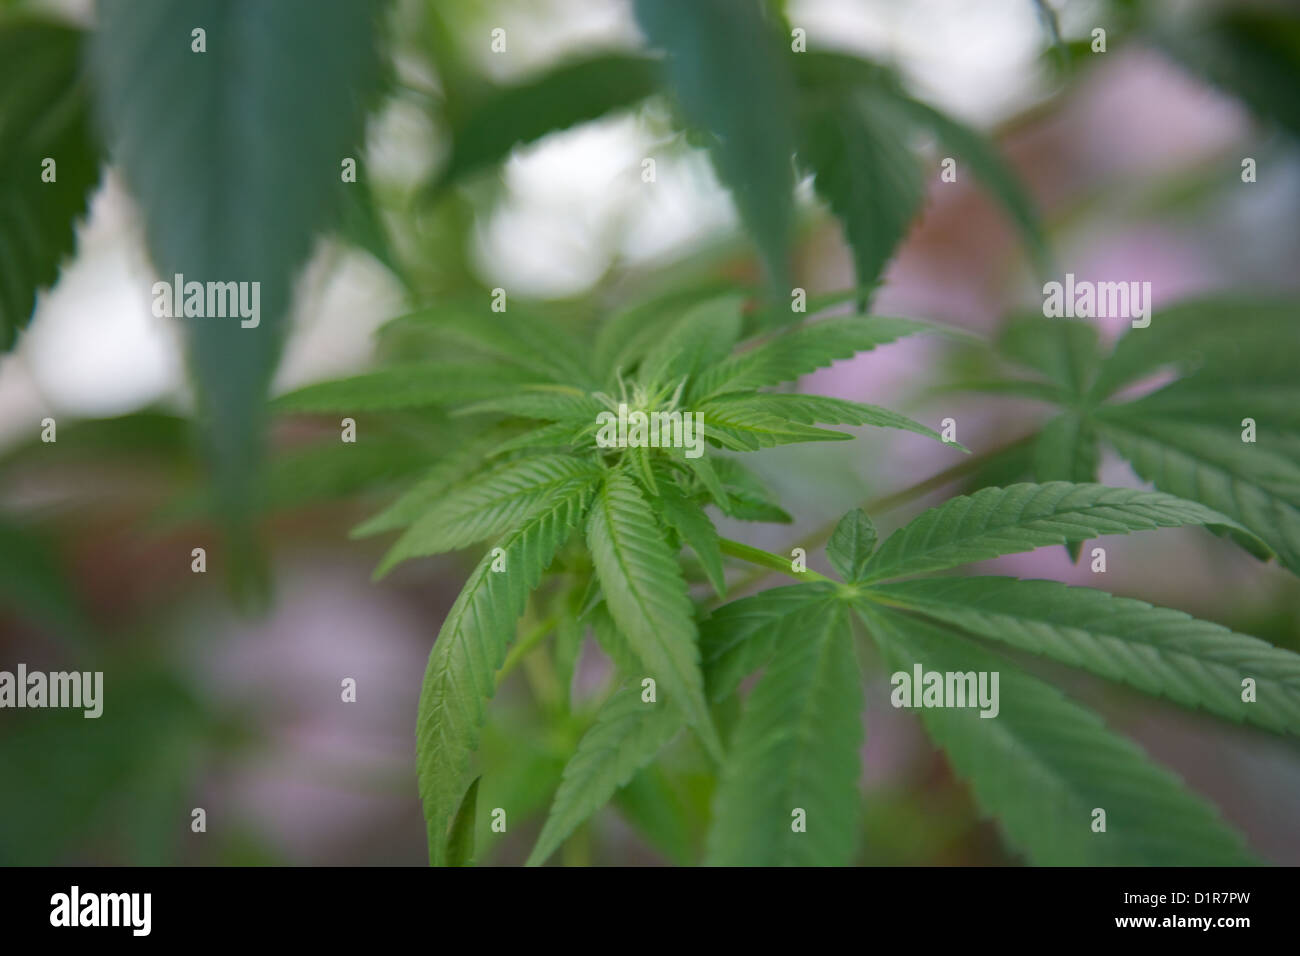 Cannabis plants, marijuana, growing in pots in back yard Stock Photo